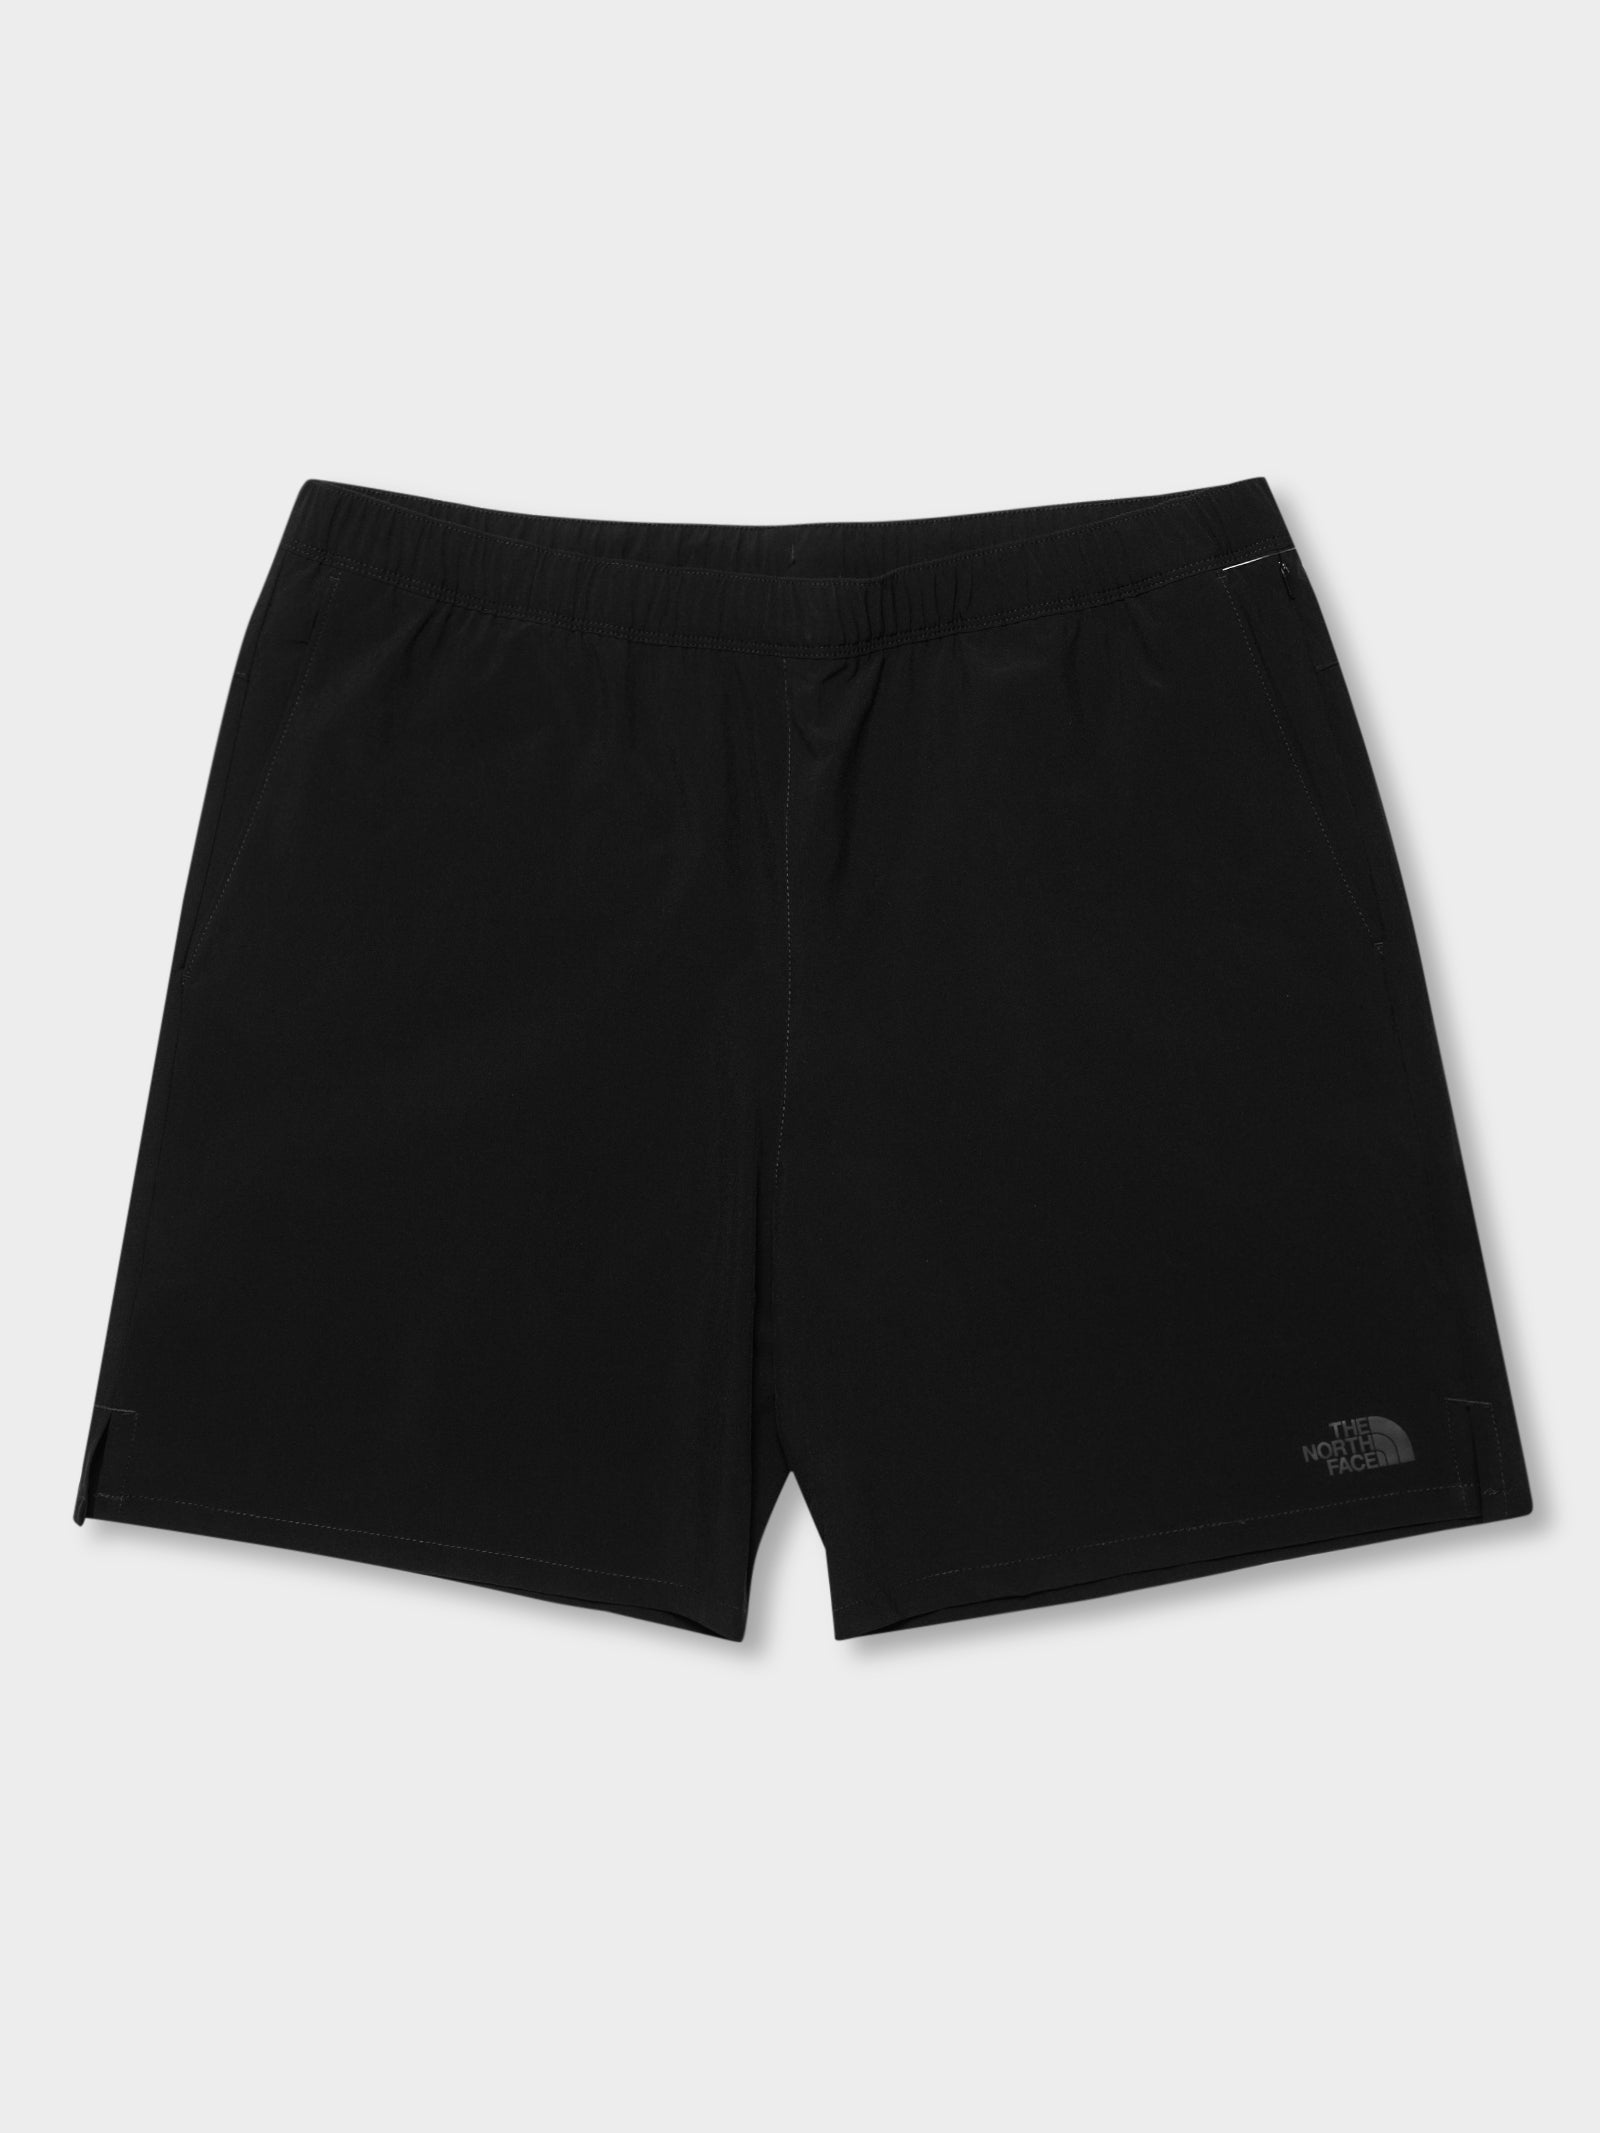 Wander Shorts in Black